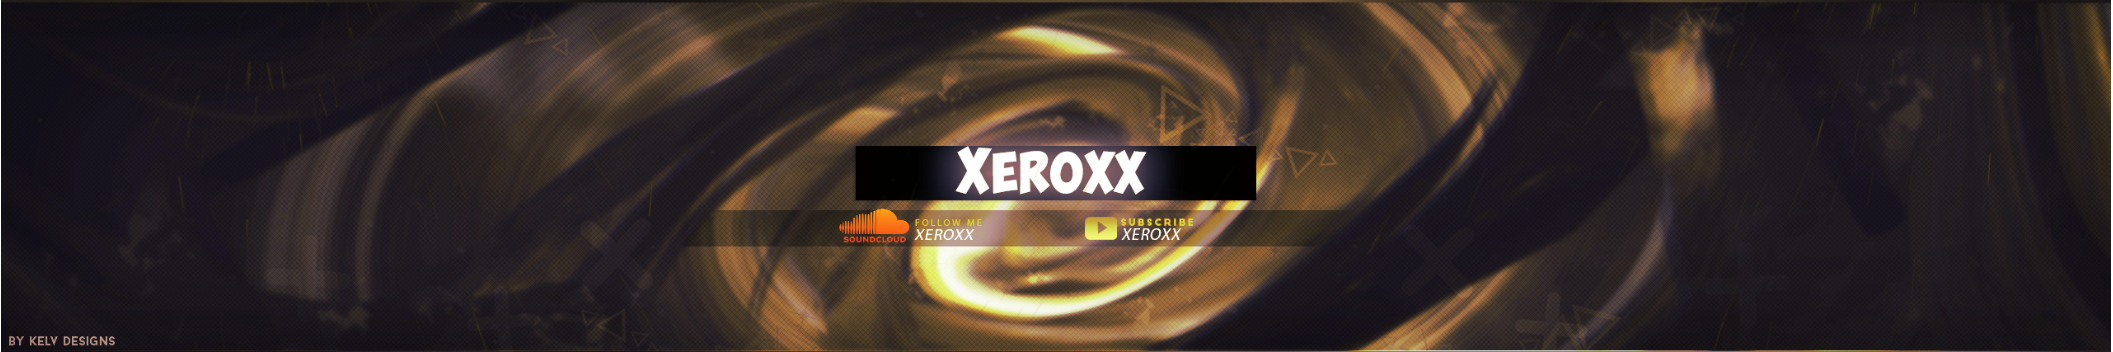 Xeroxx